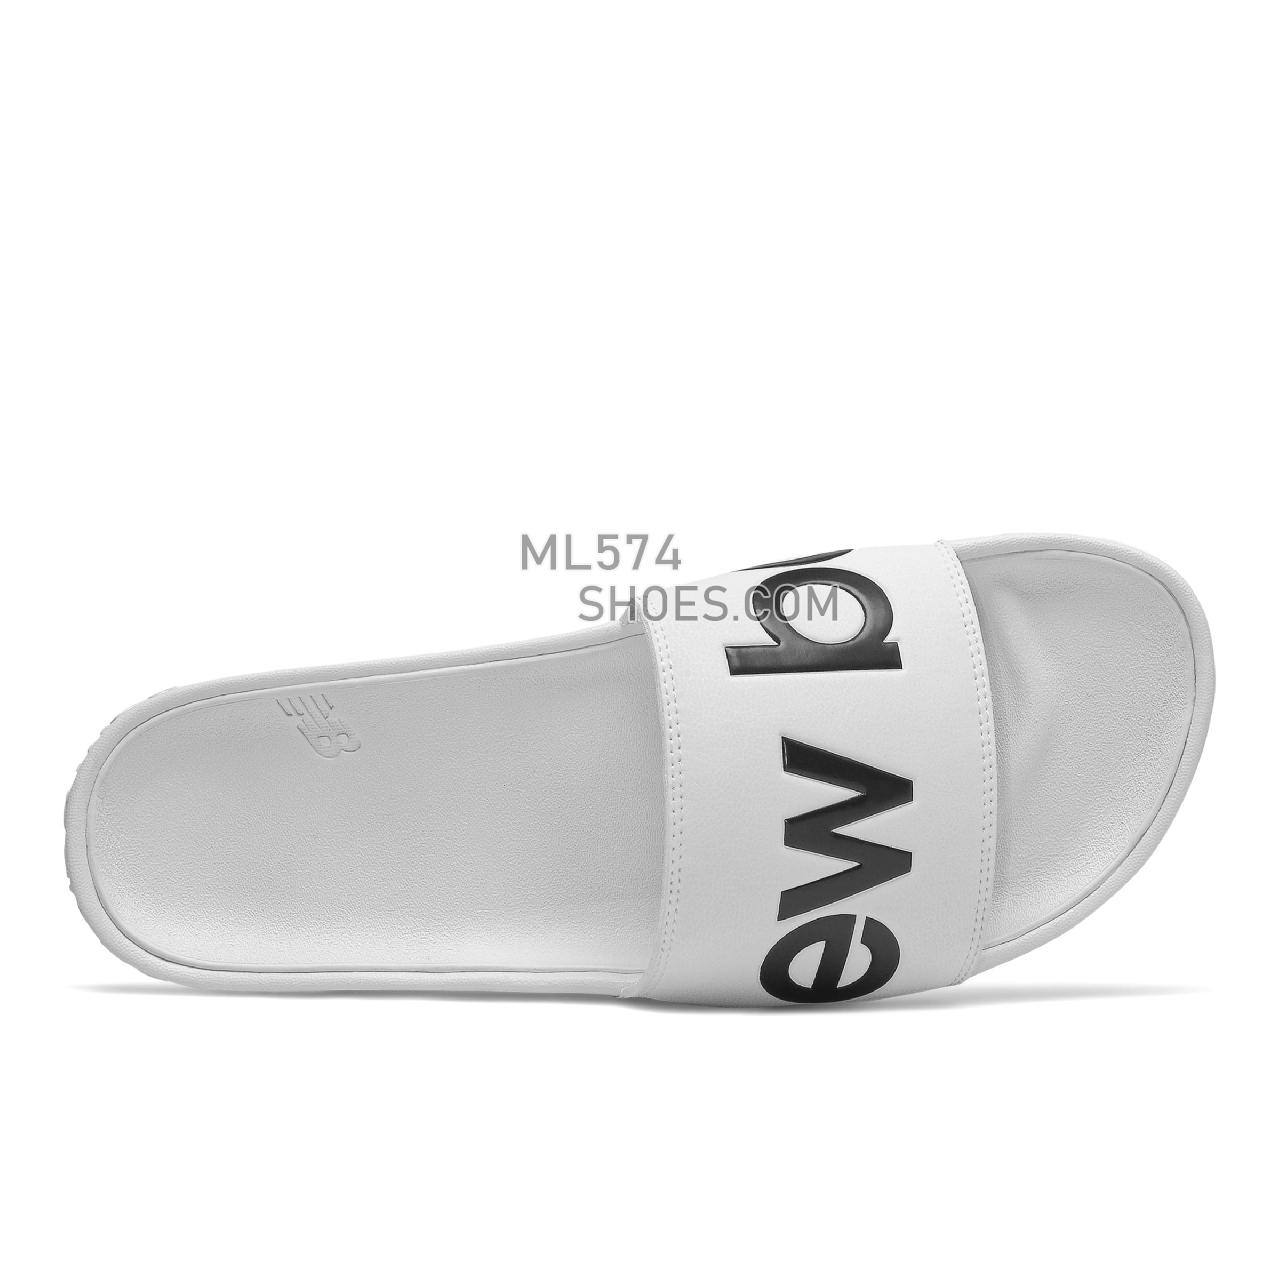 New Balance 200 - Men's Sandals - White with Black - SMF200WT